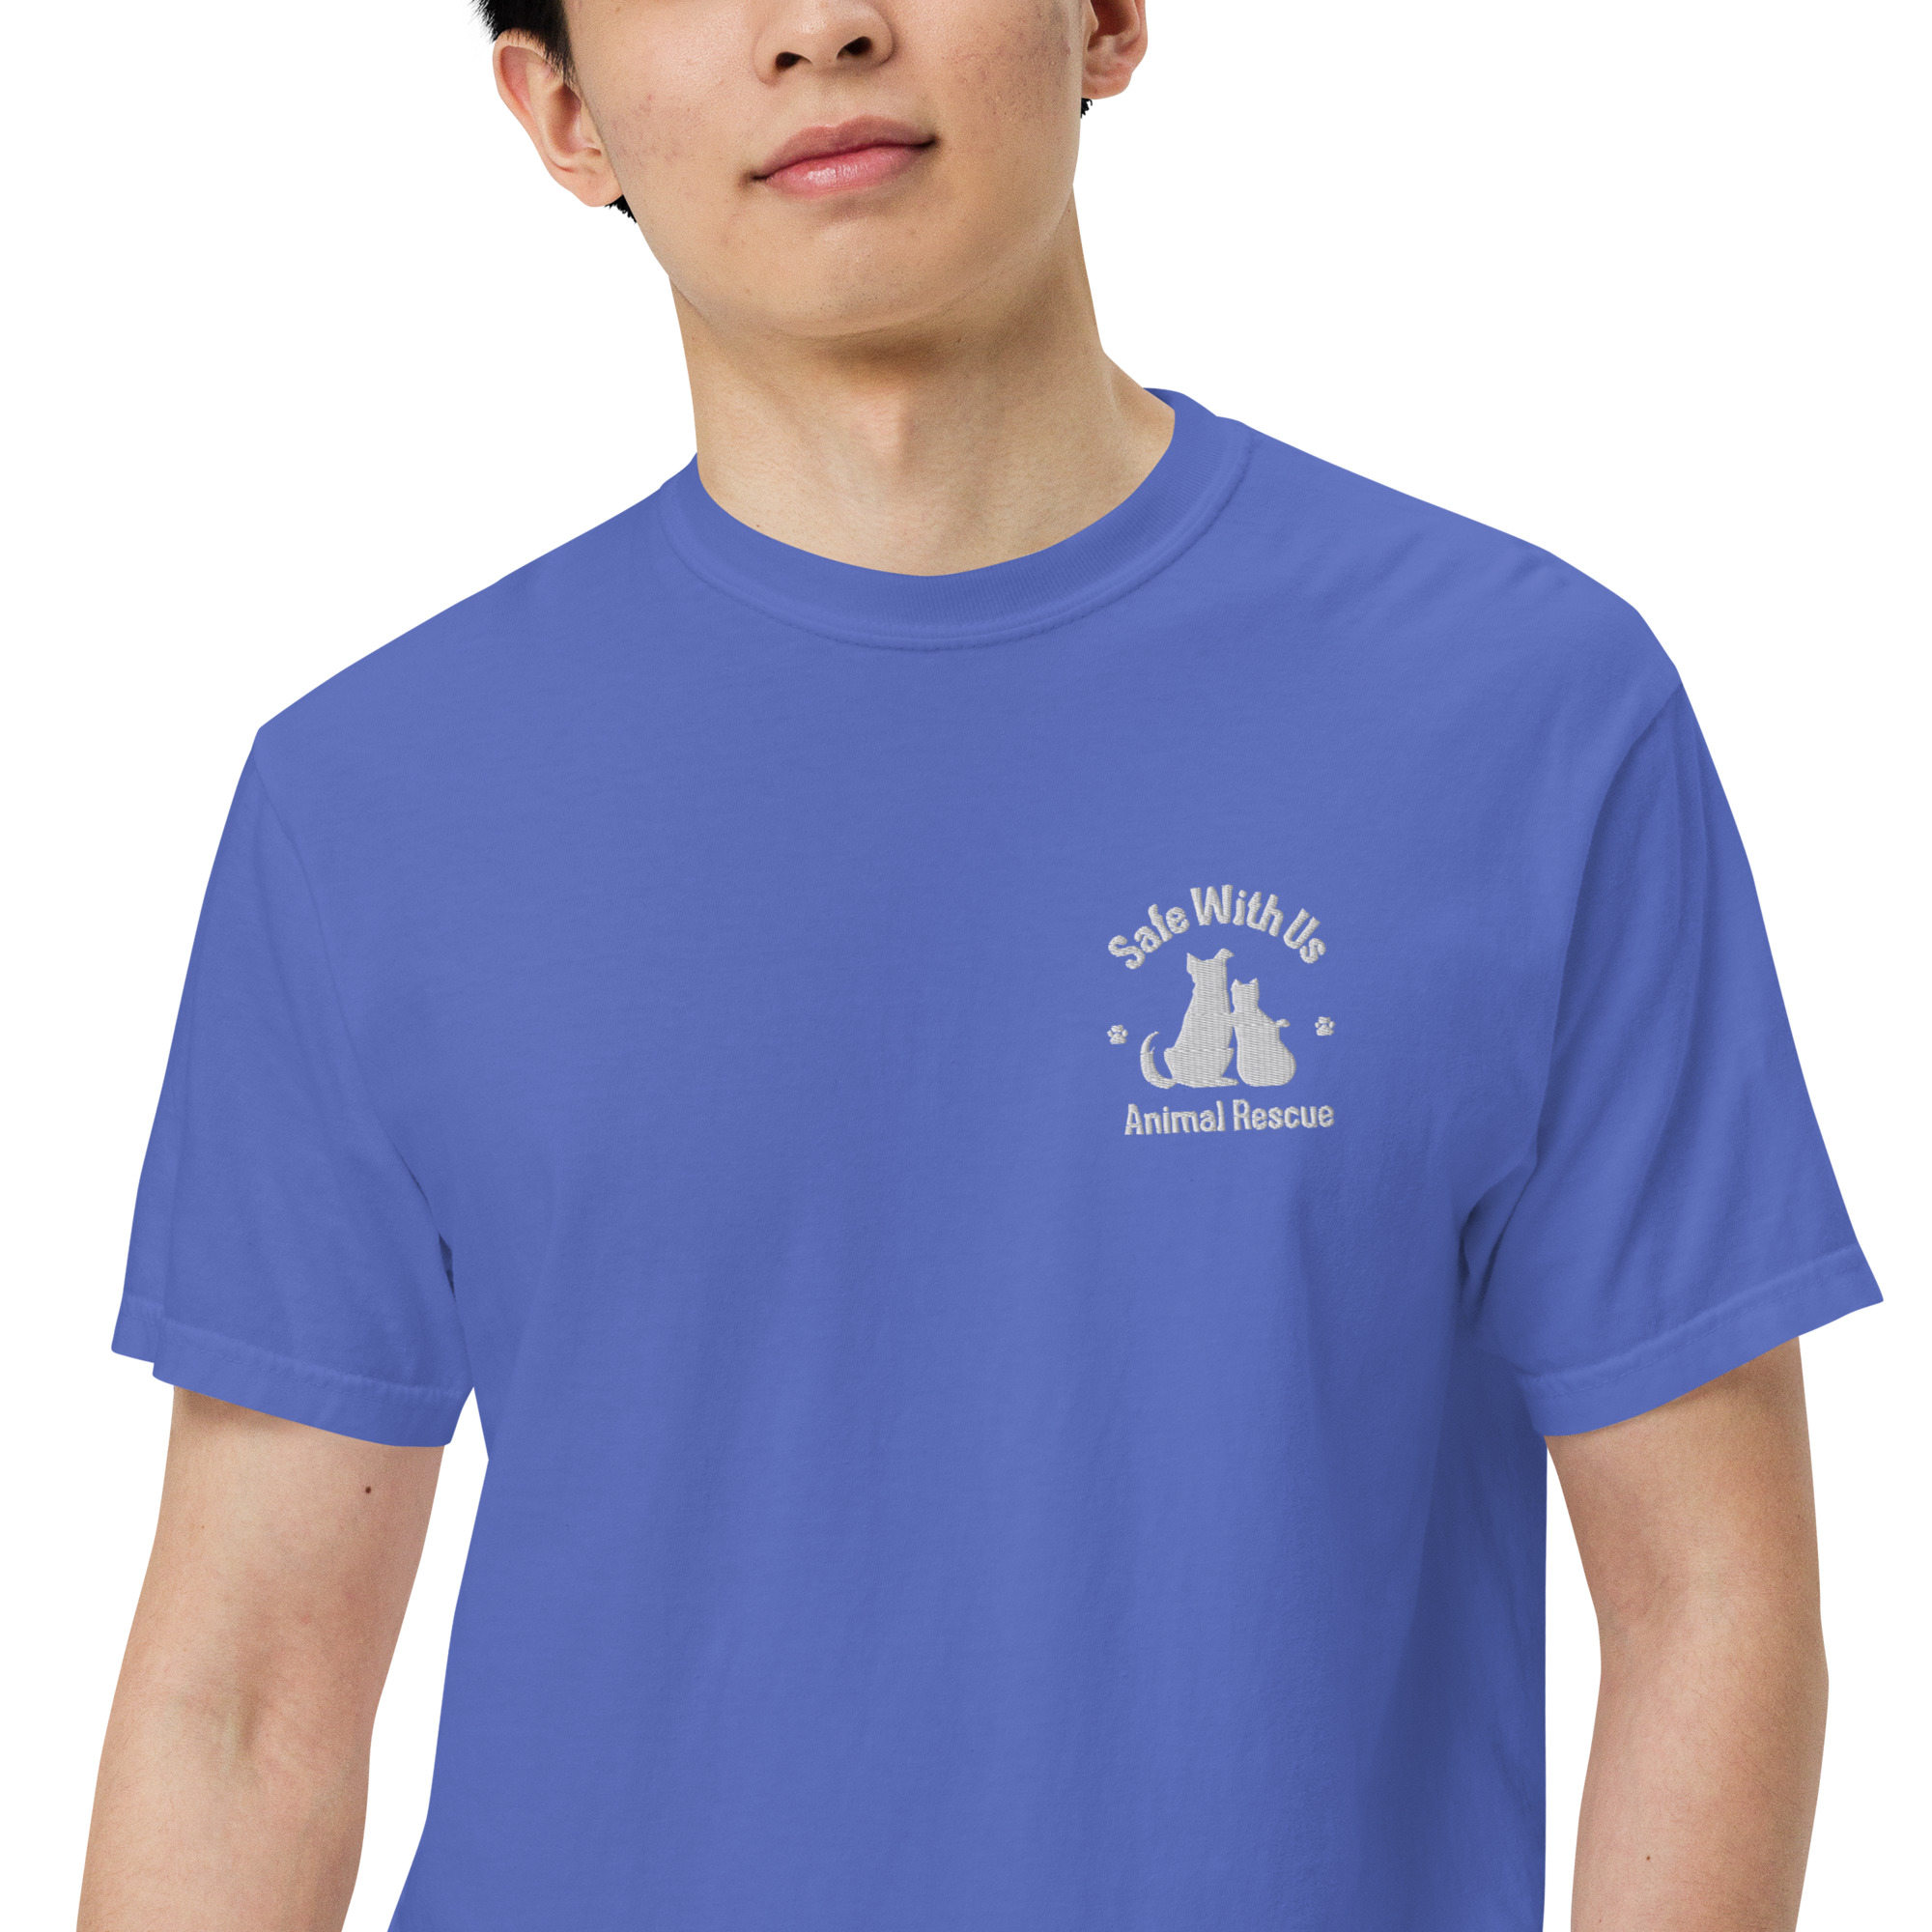 mens-garment-dyed-heavyweight-t-shirt-flo-blue-zoomed-in-2-6415fedc28a92.jpg